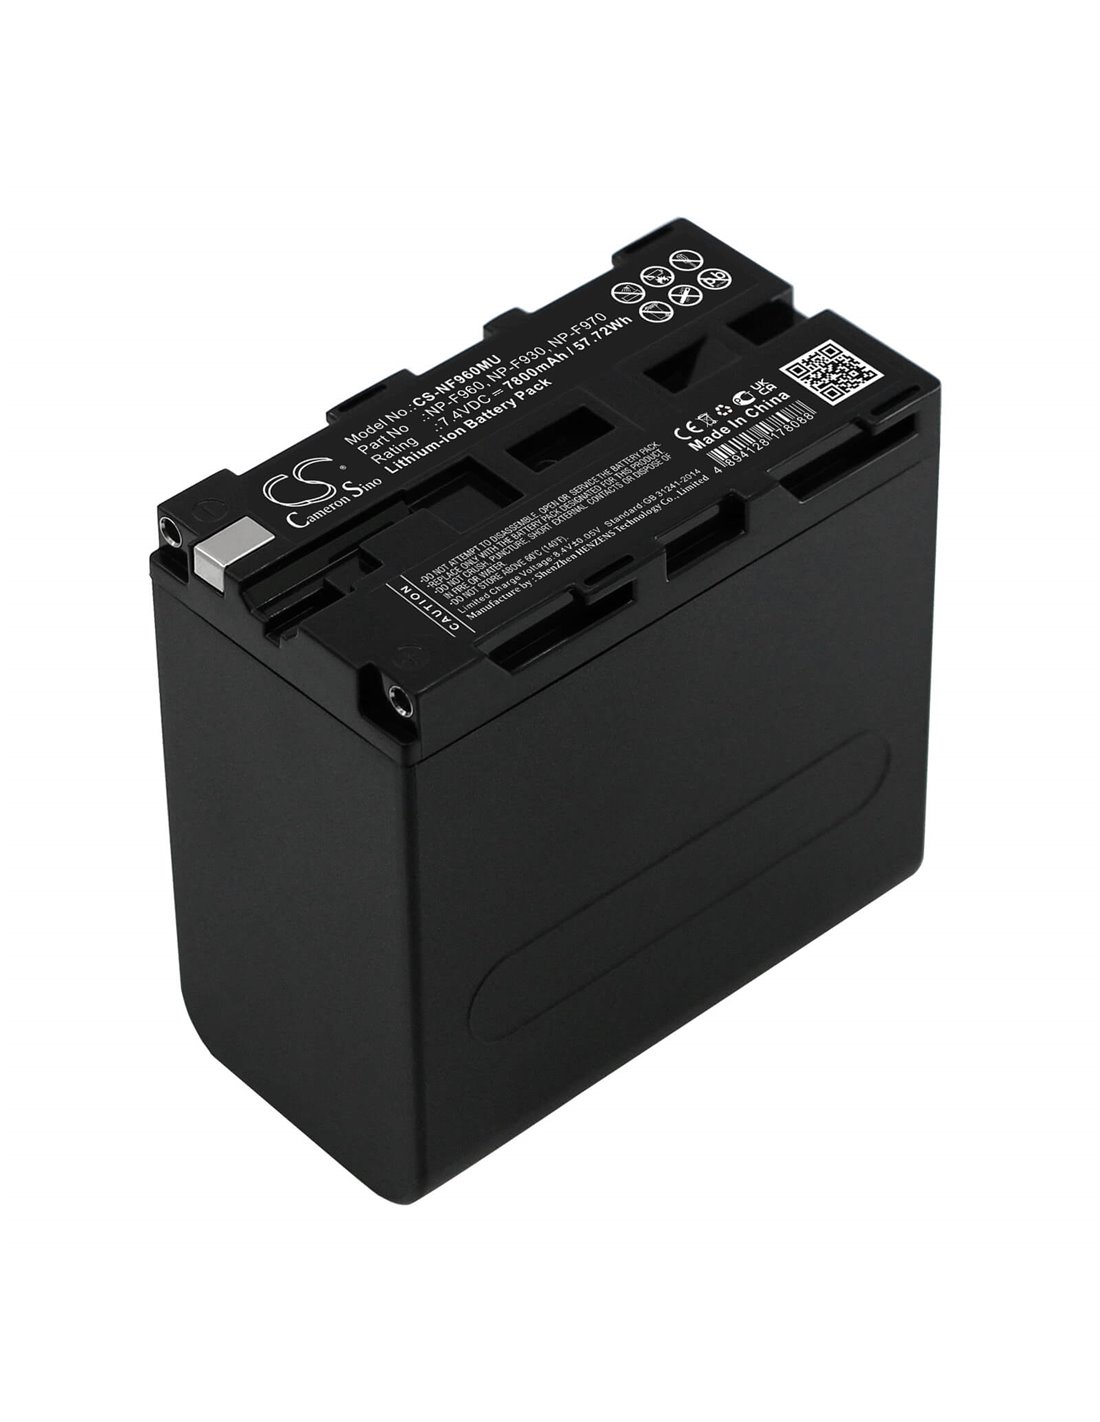 7.4V, Li-ion, 7800mAh, Battery fits Sound Devices, 633 Mixer, Pix 240i, 57.72Wh